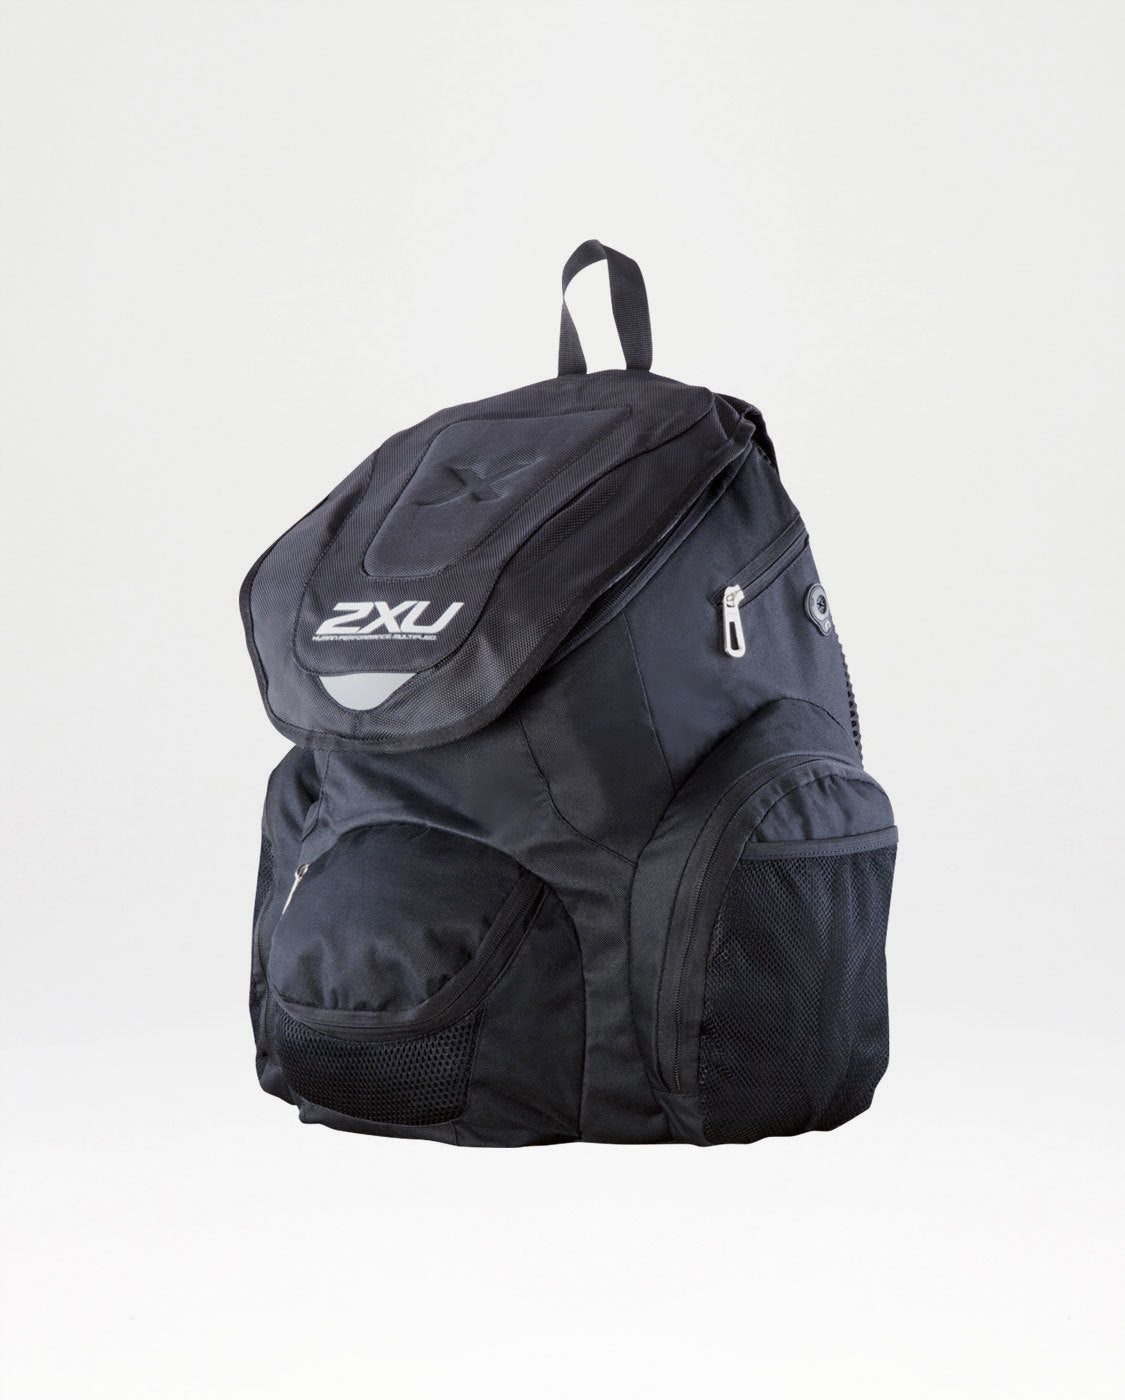 2XU Event Backpack